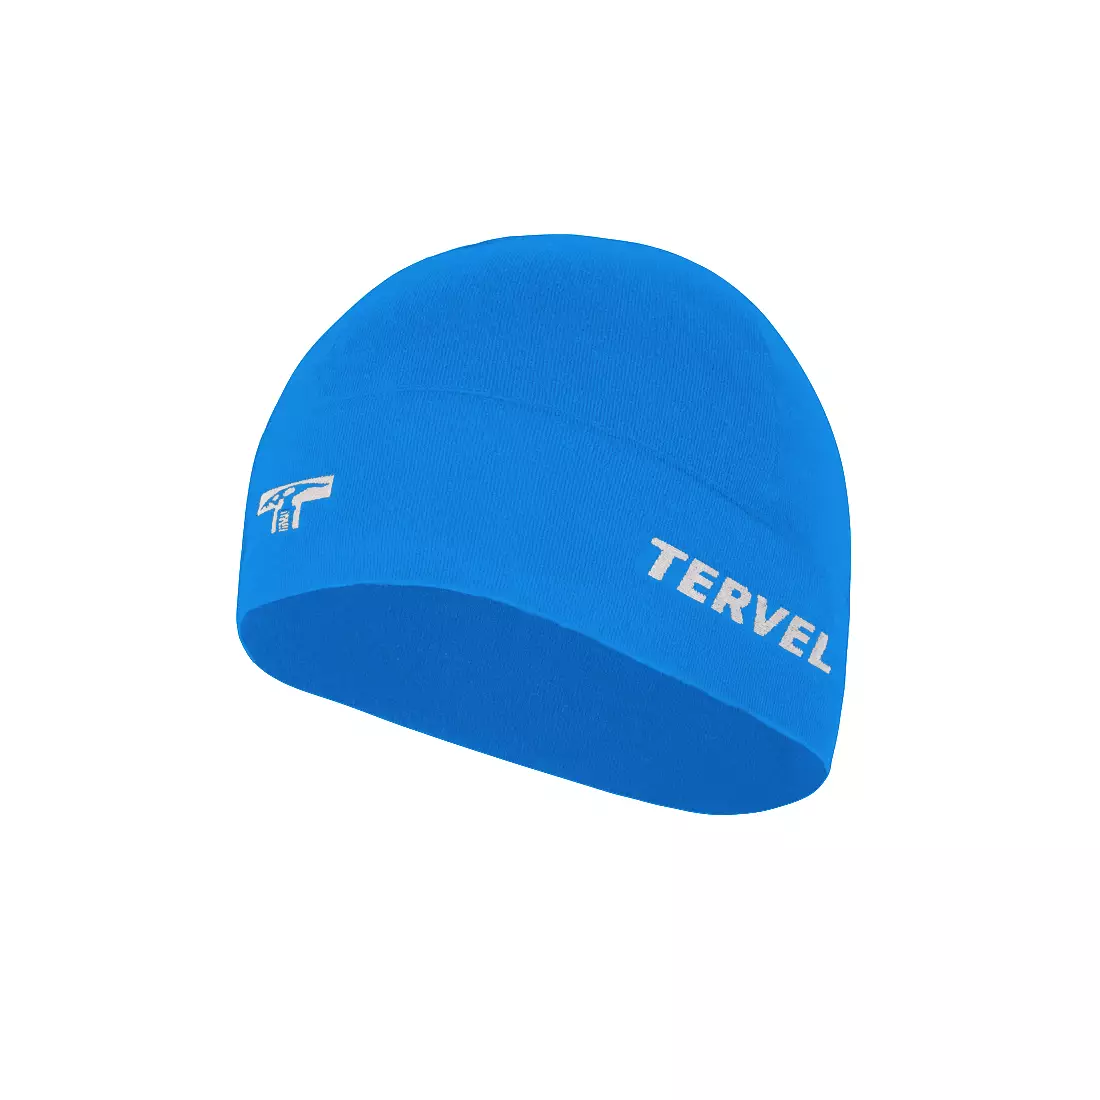 TERVEL 7001 - COMFORTLINE - training cap, color: Blue, size: Universal